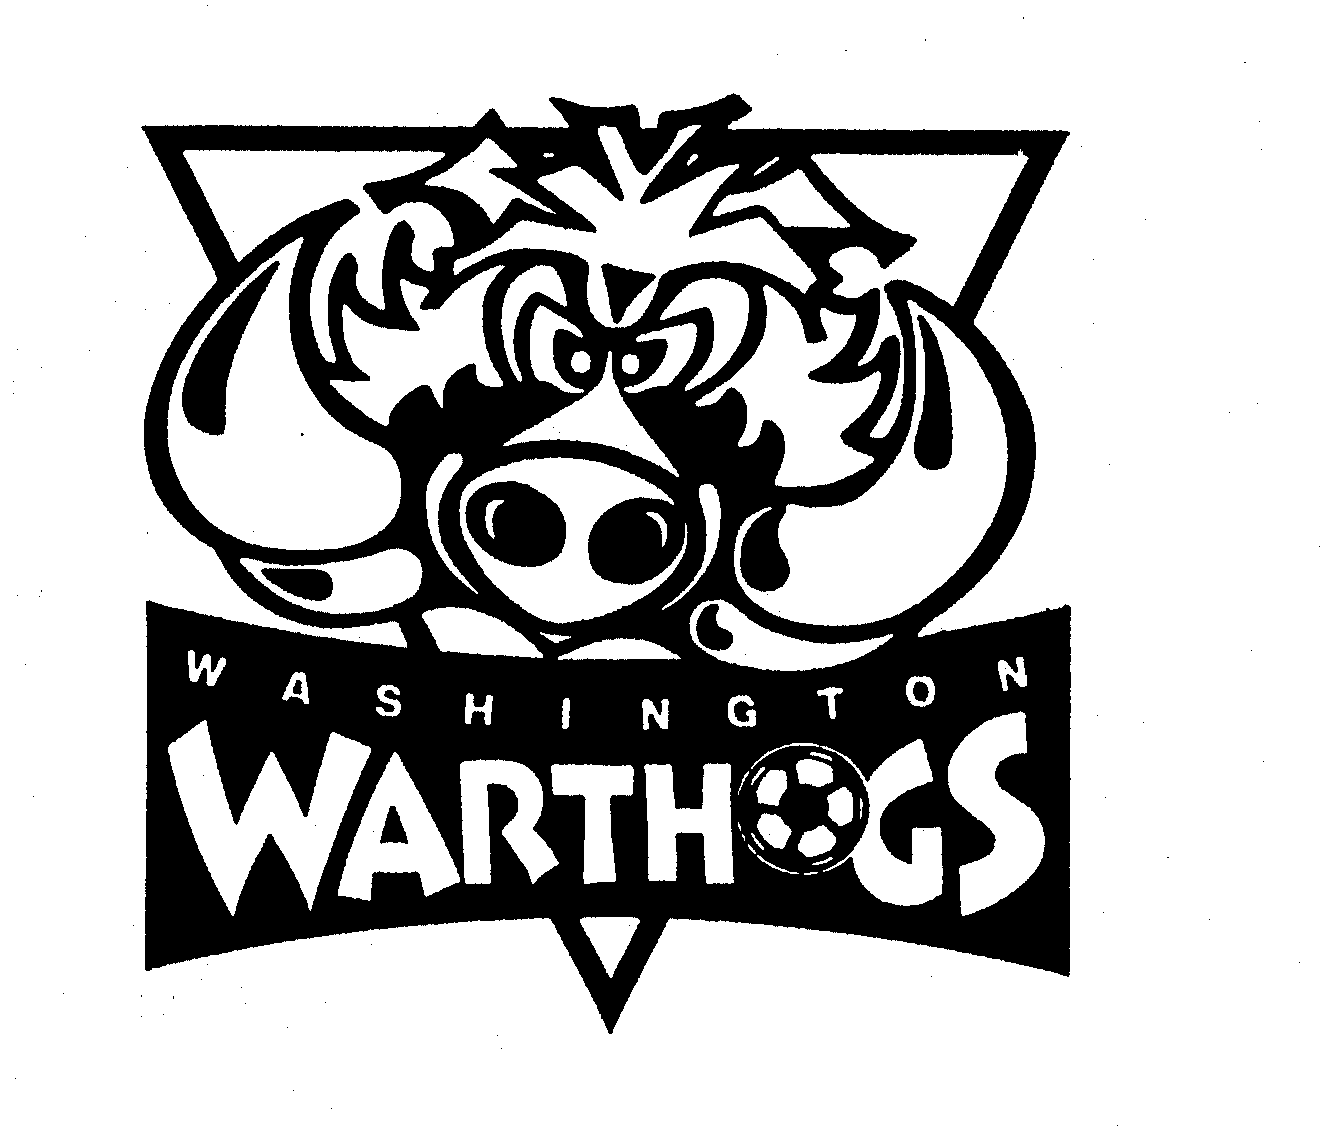  WASHINGTON WARTHOGS